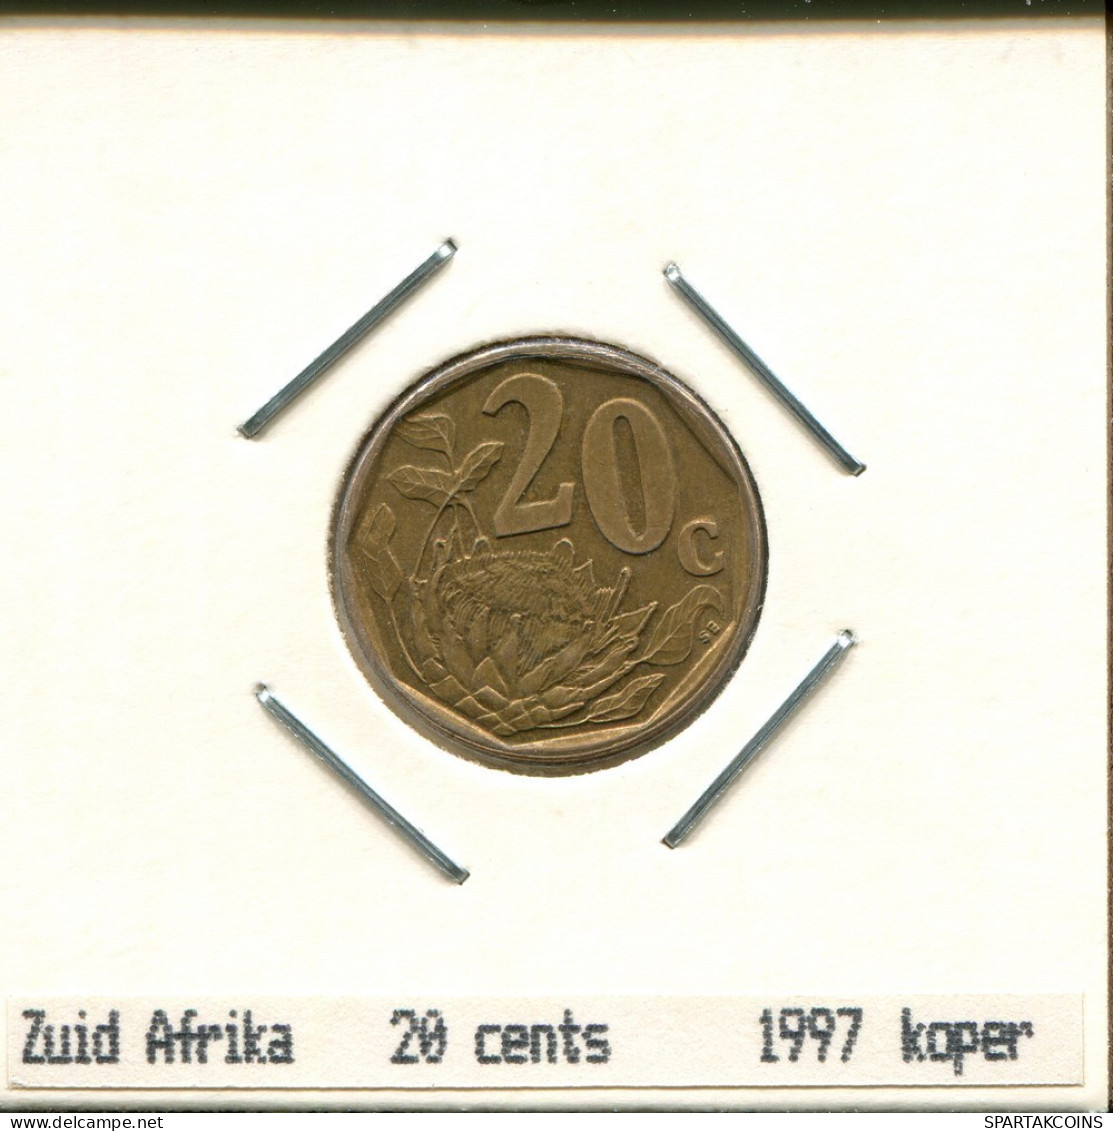 20 CENTS 1997 SUDAFRICA SOUTH AFRICA Moneda #AS297.E.A - Sud Africa